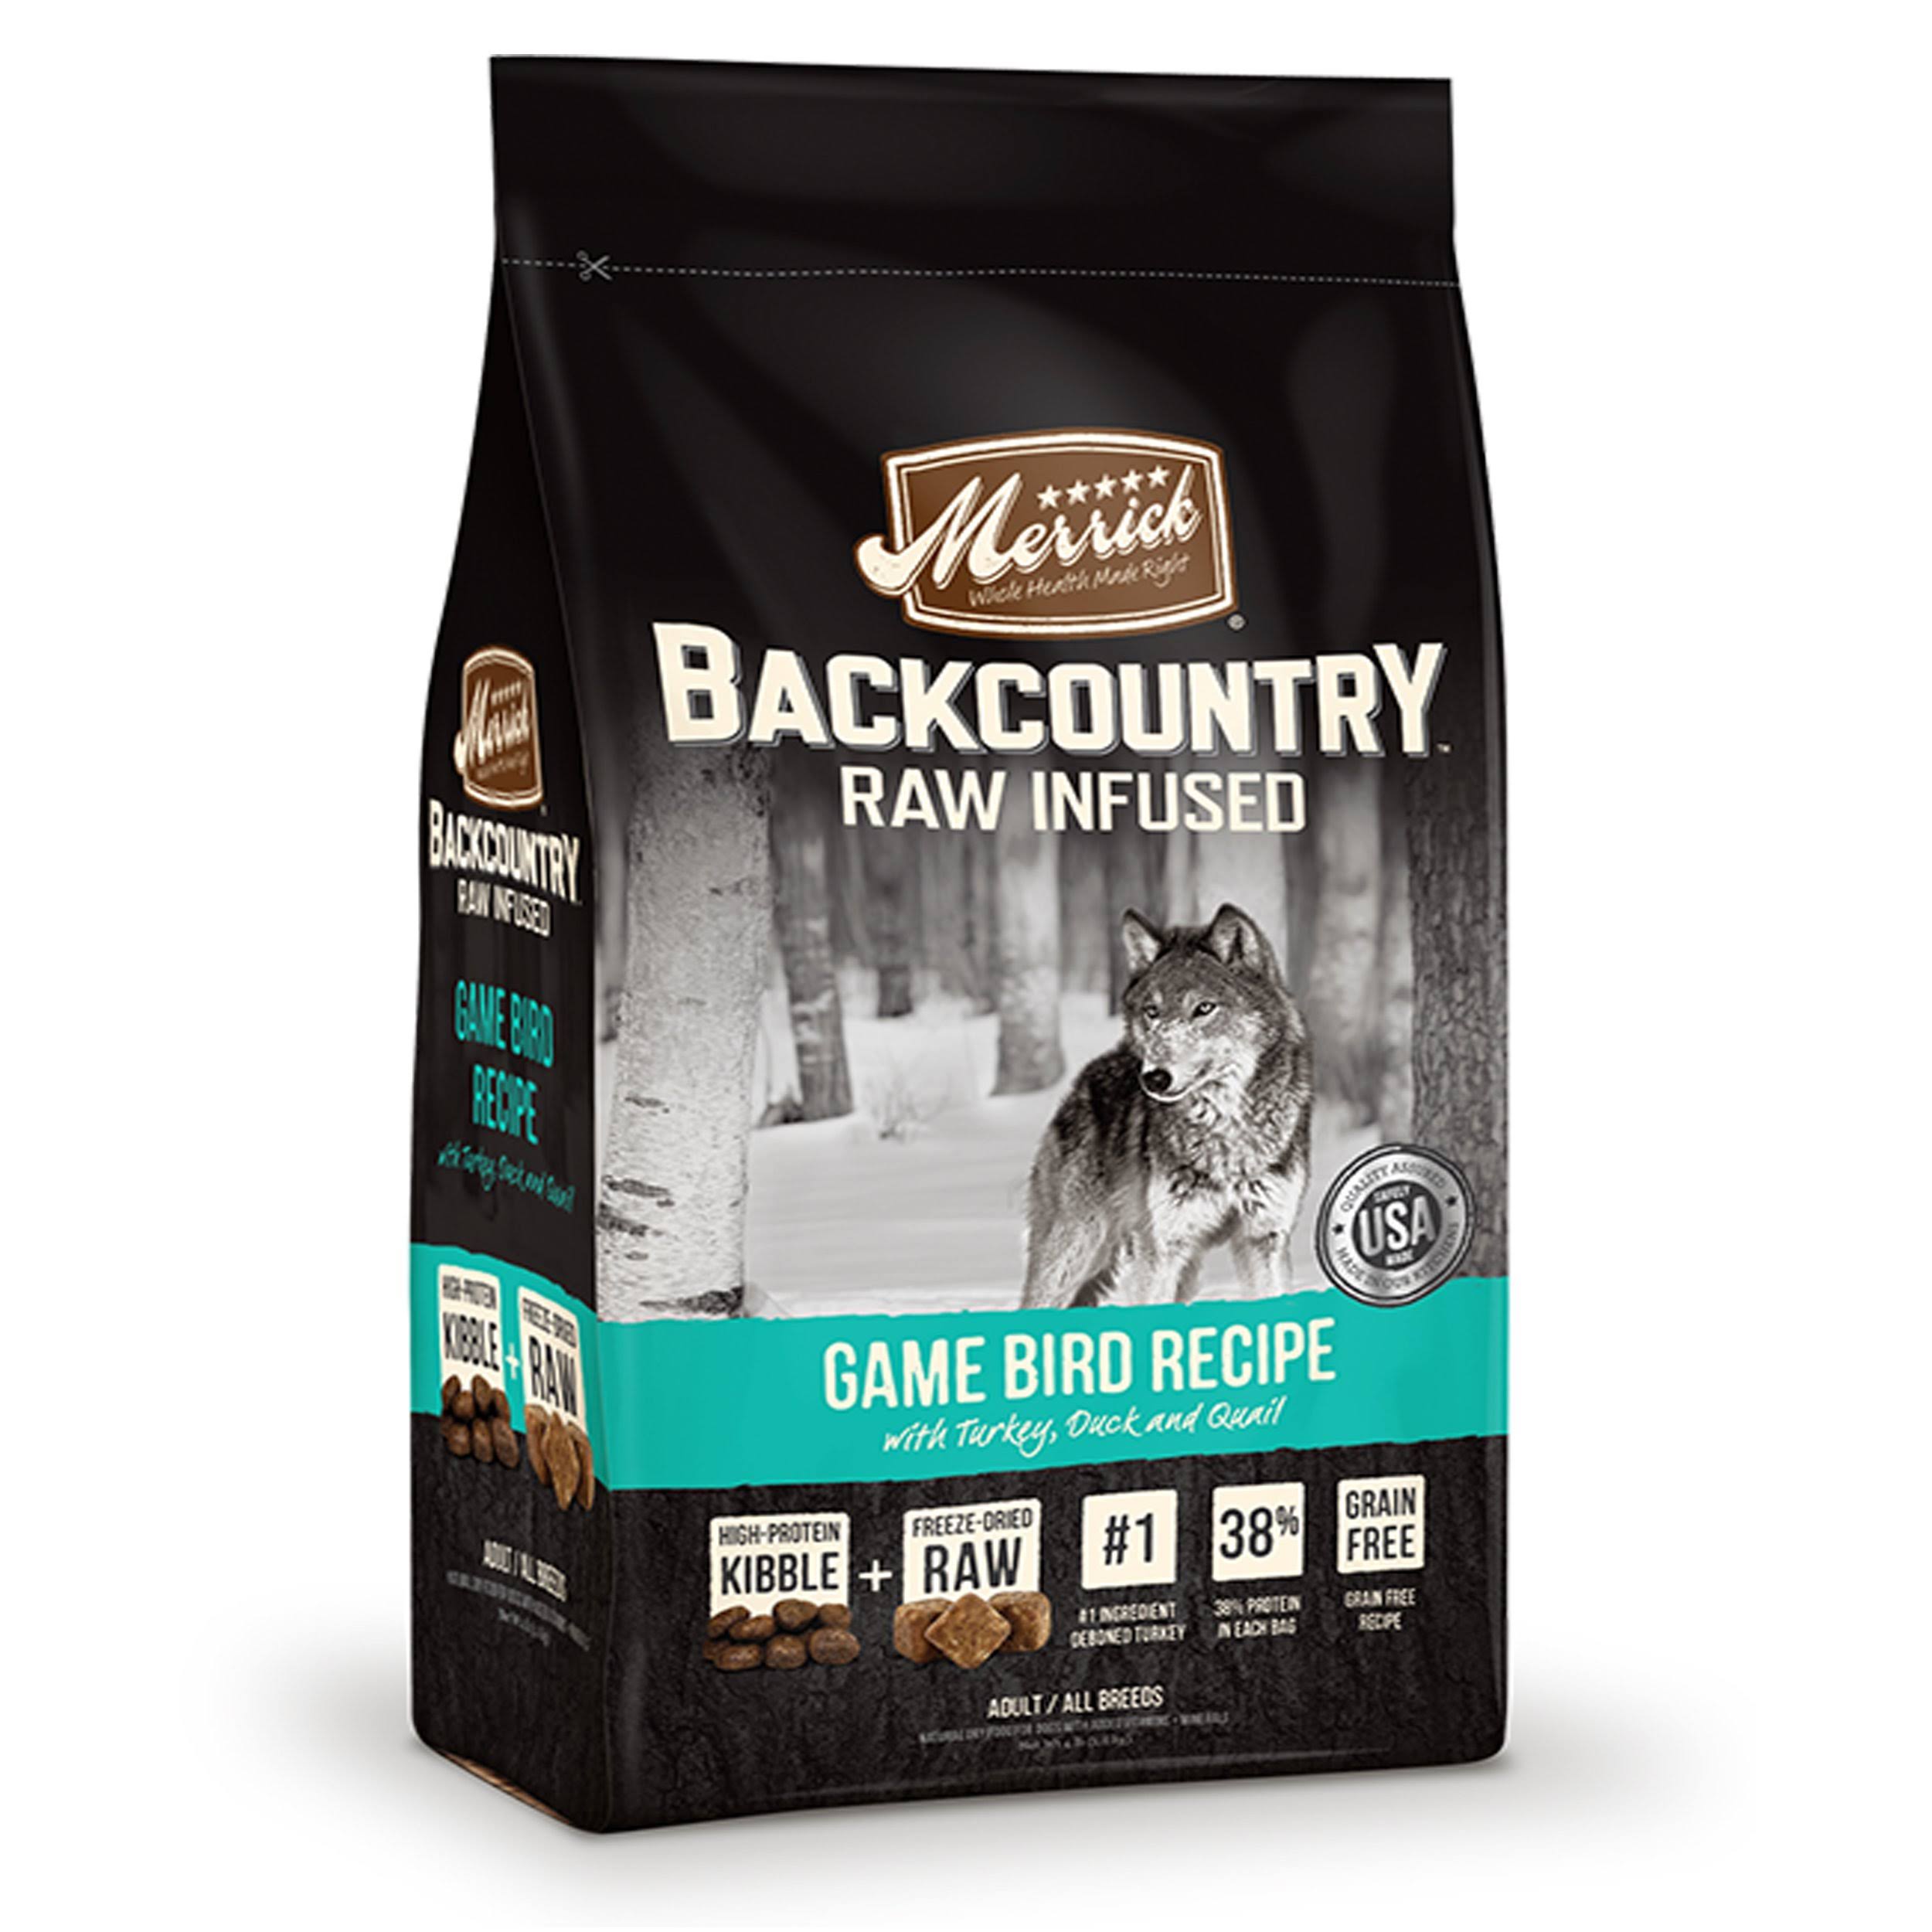 Merrick Backcountry Grain Free Raw Infused Adult Dog Food - Game Bird, 4lb